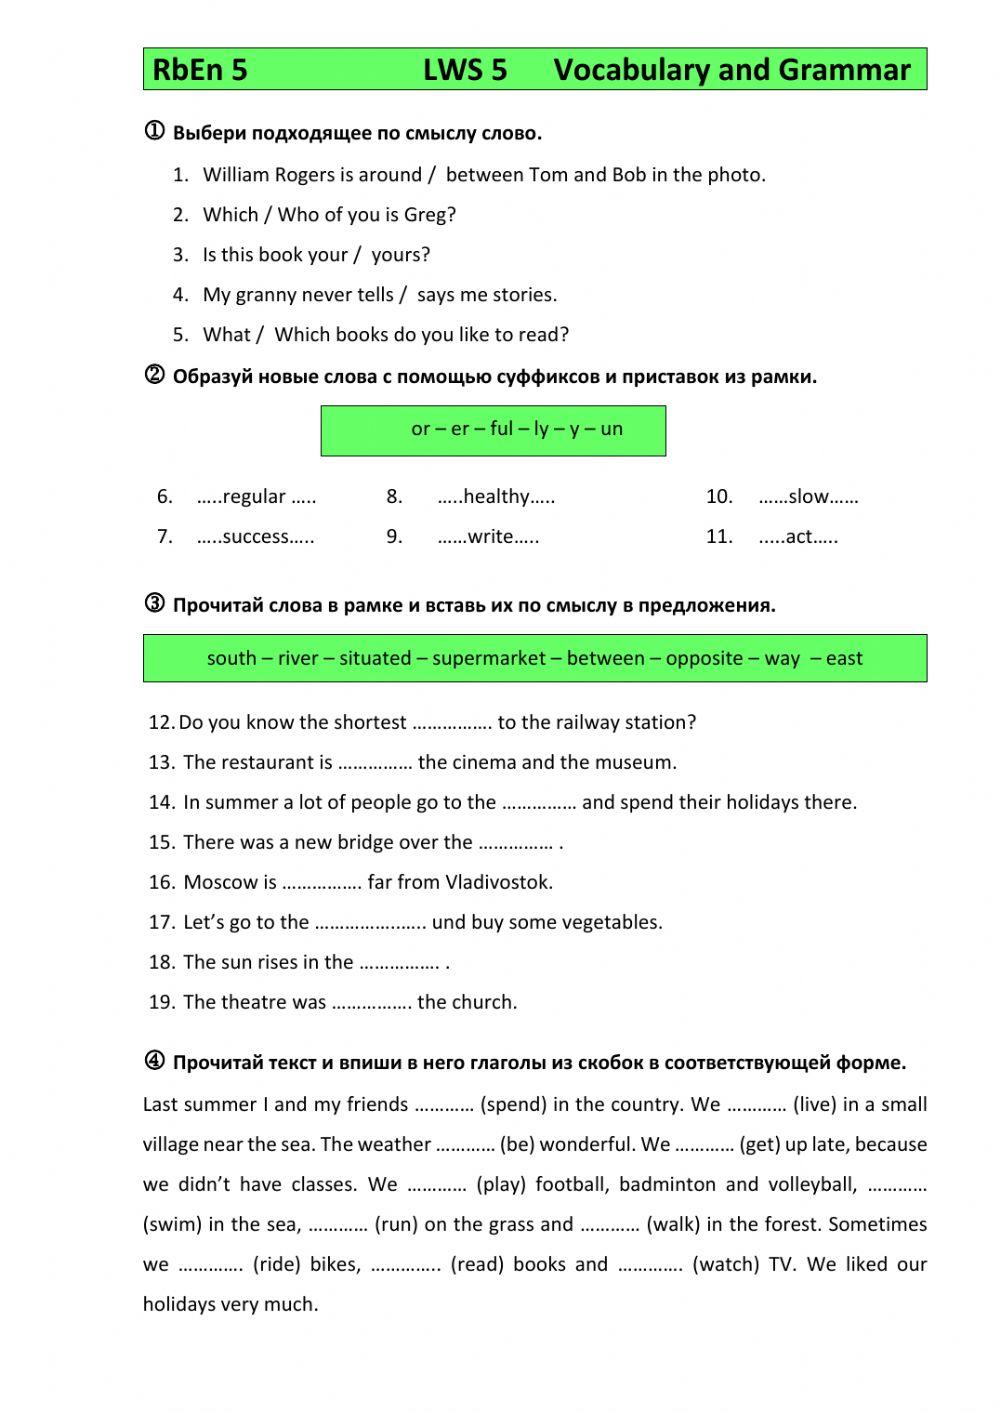 RbEn 5-LWS-5.7-Vocabulary and Grammar